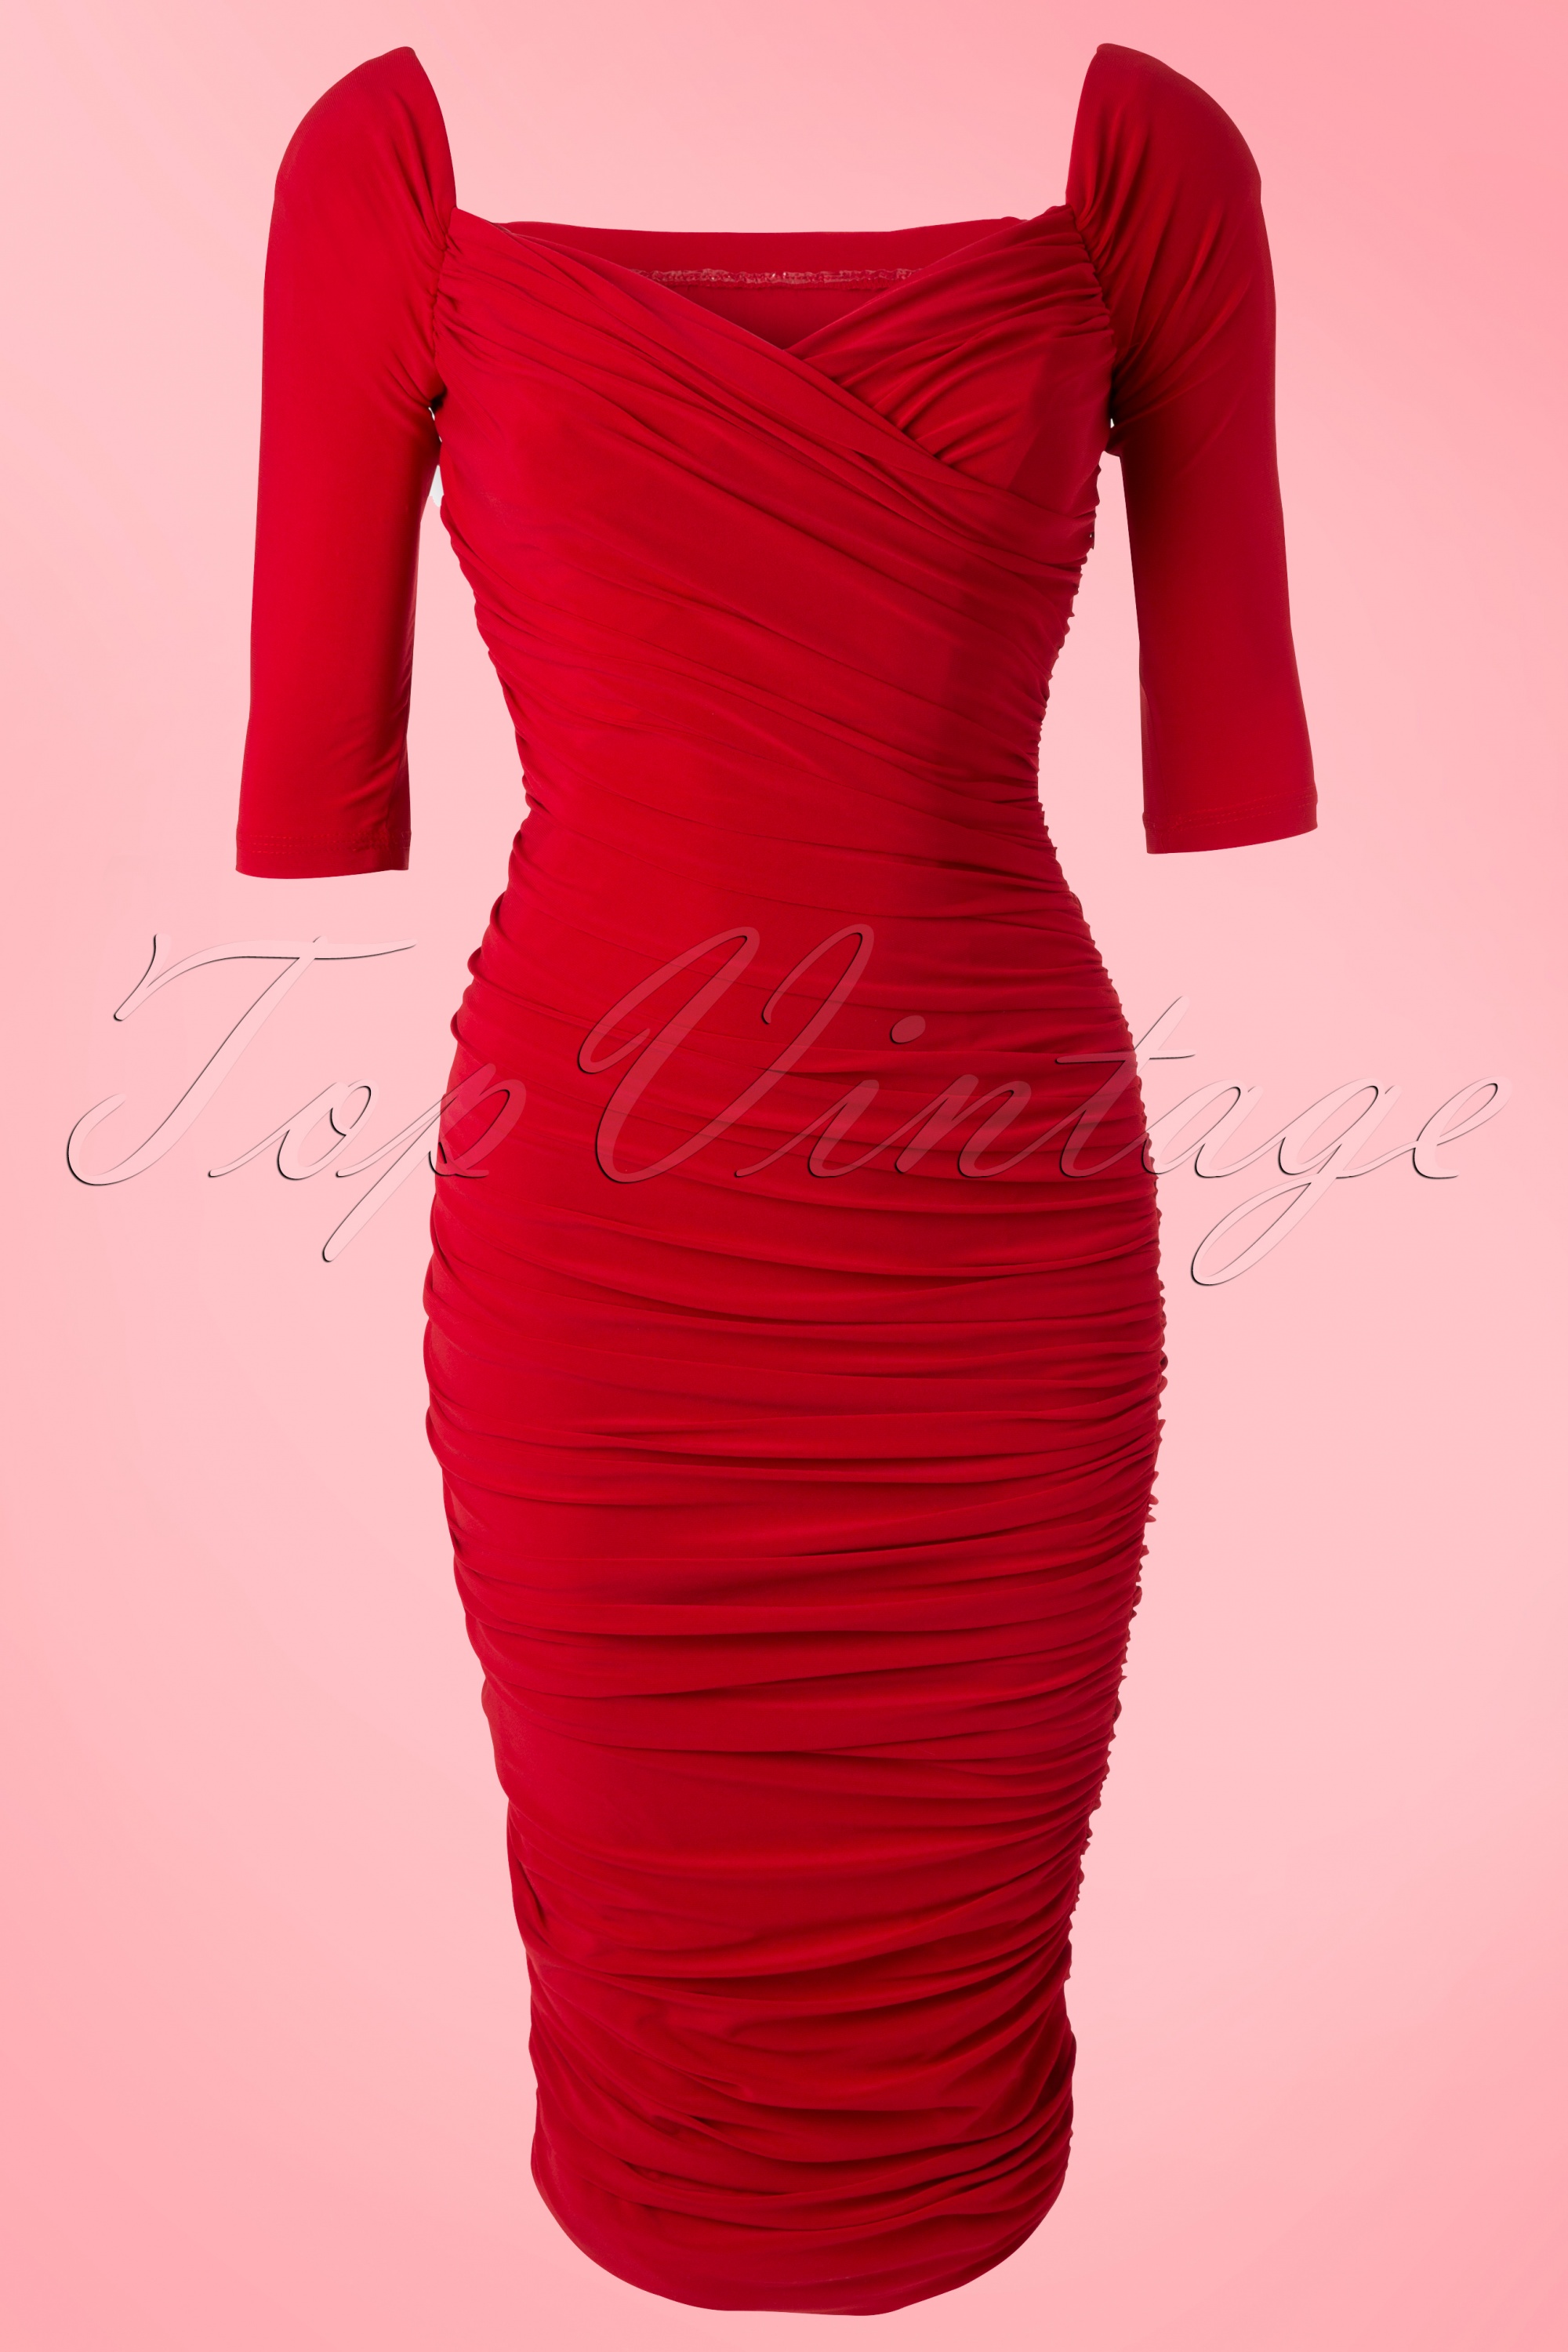 Pinup Couture - Monica Jurk in Rode Matte Jersey Knit van Laura Byrnes Black Label 9